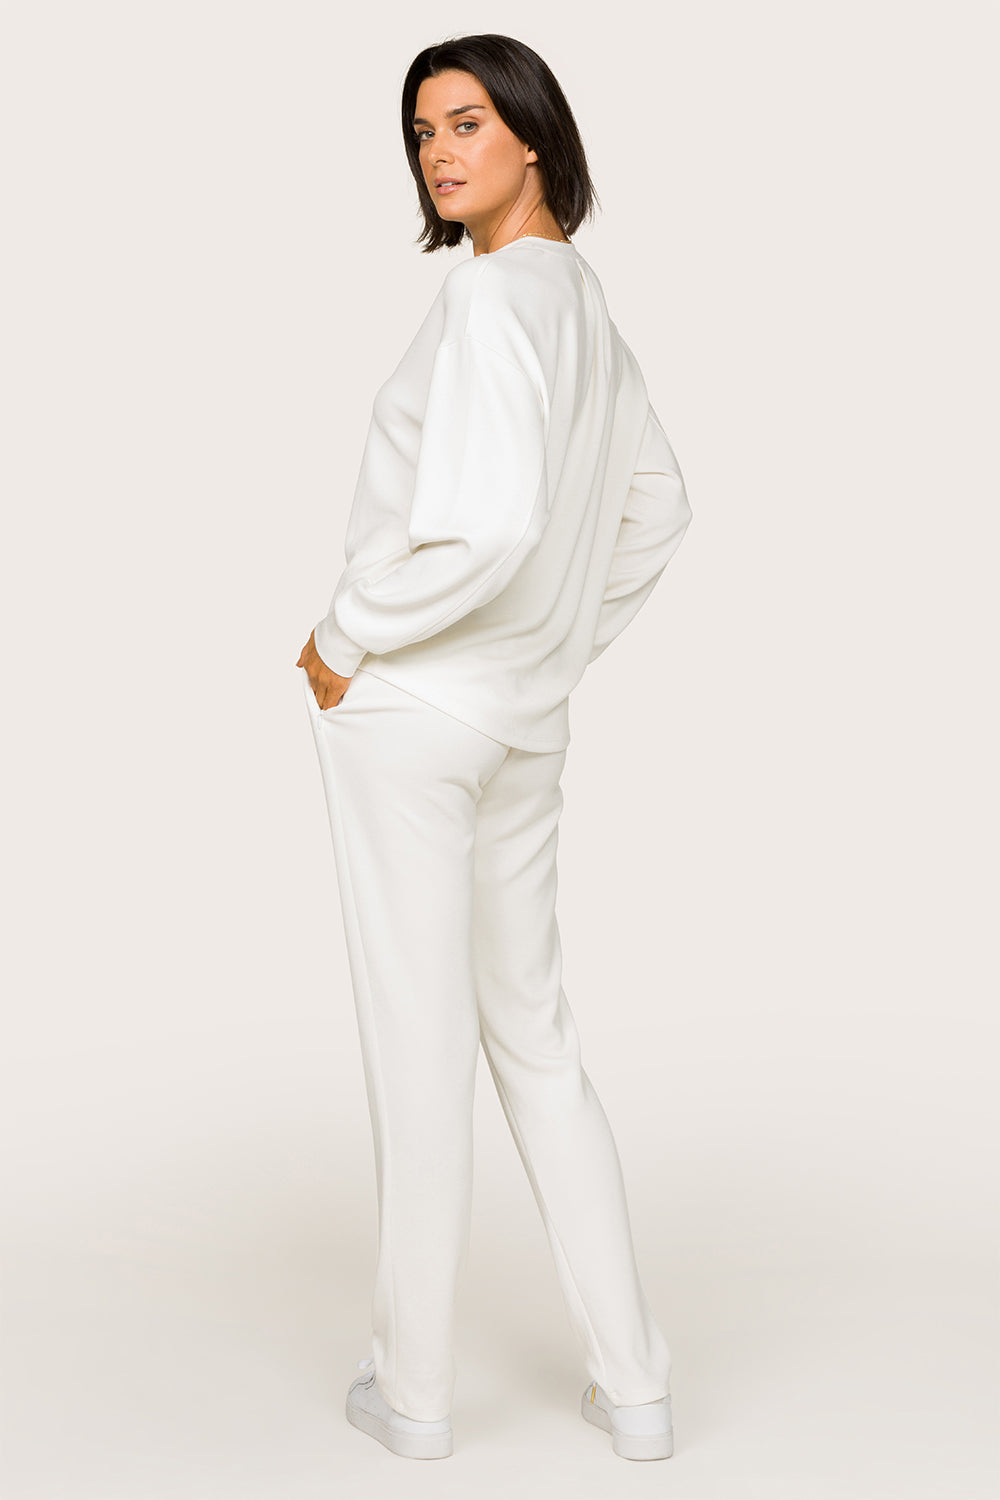 Alala women's soft crew neck quarter zip sweatshirt in white